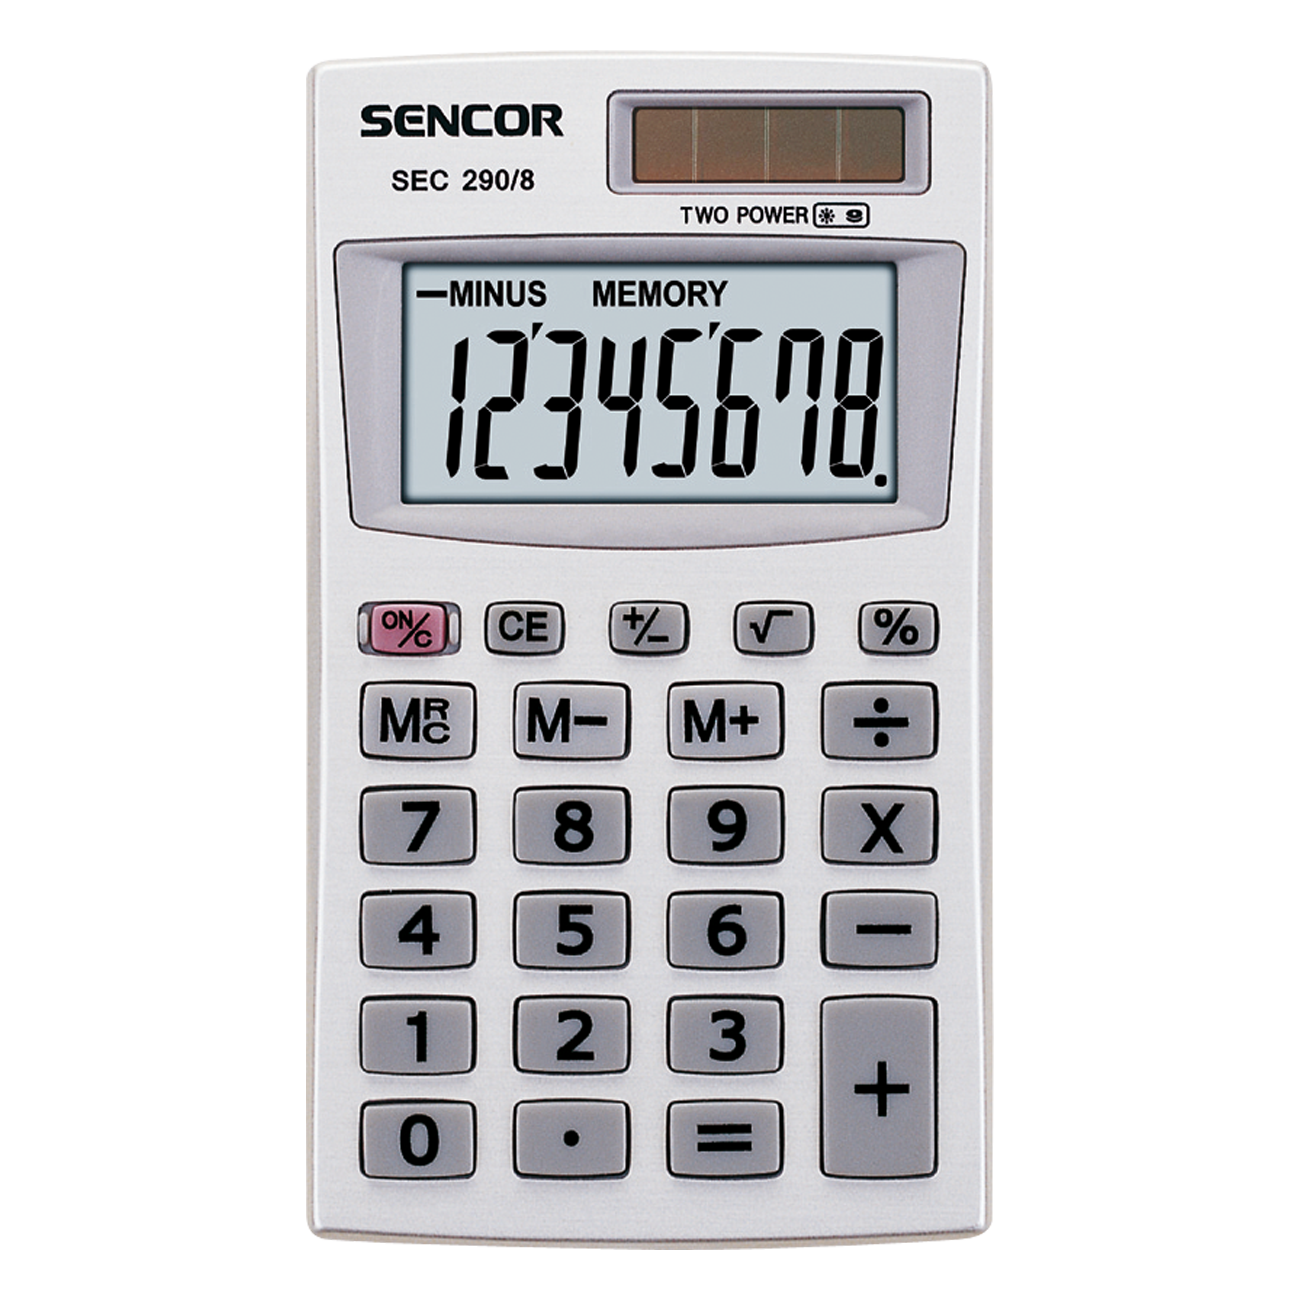 SEC 290/8 Handheld Calculator